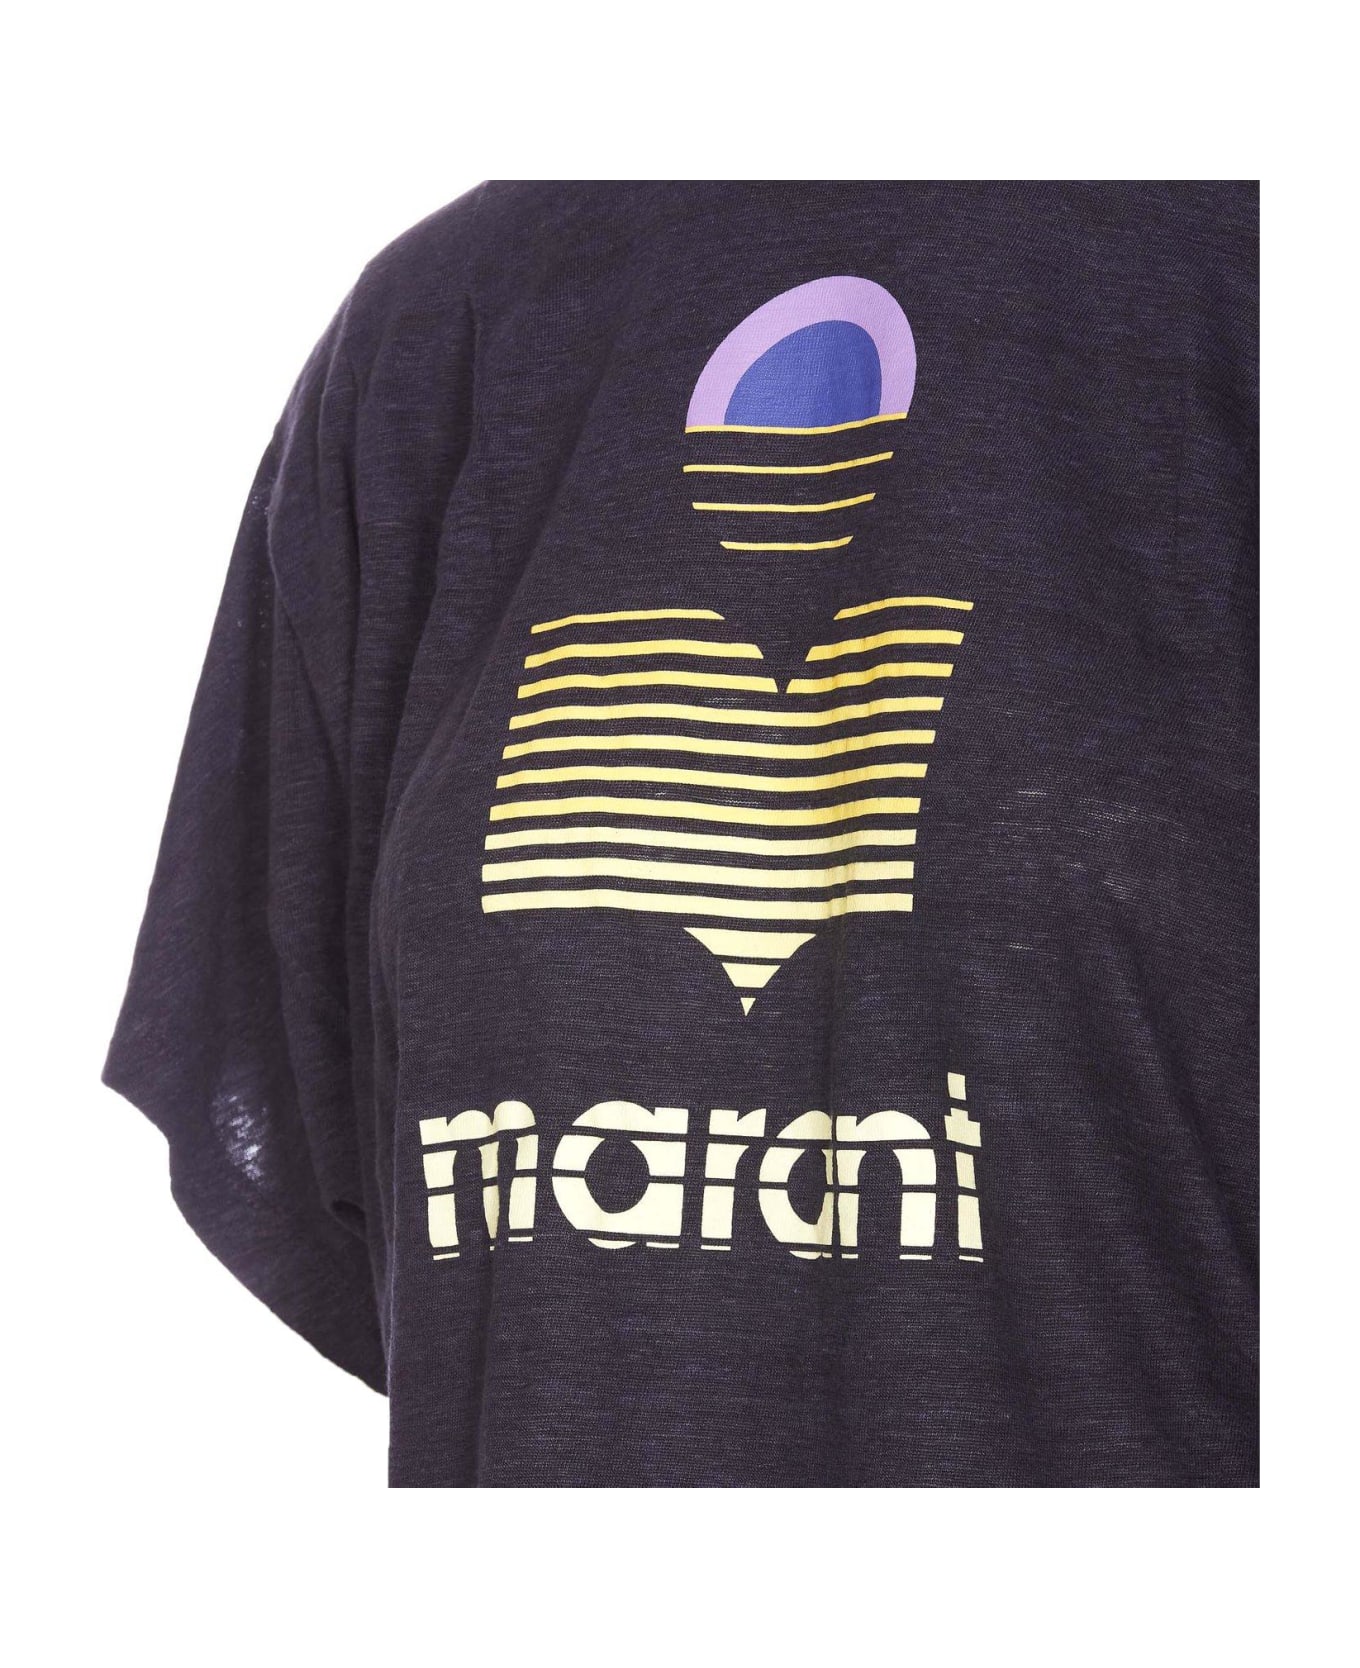 Marant Étoile Logo Printed Cropped T-shirt - FADED NIGHT